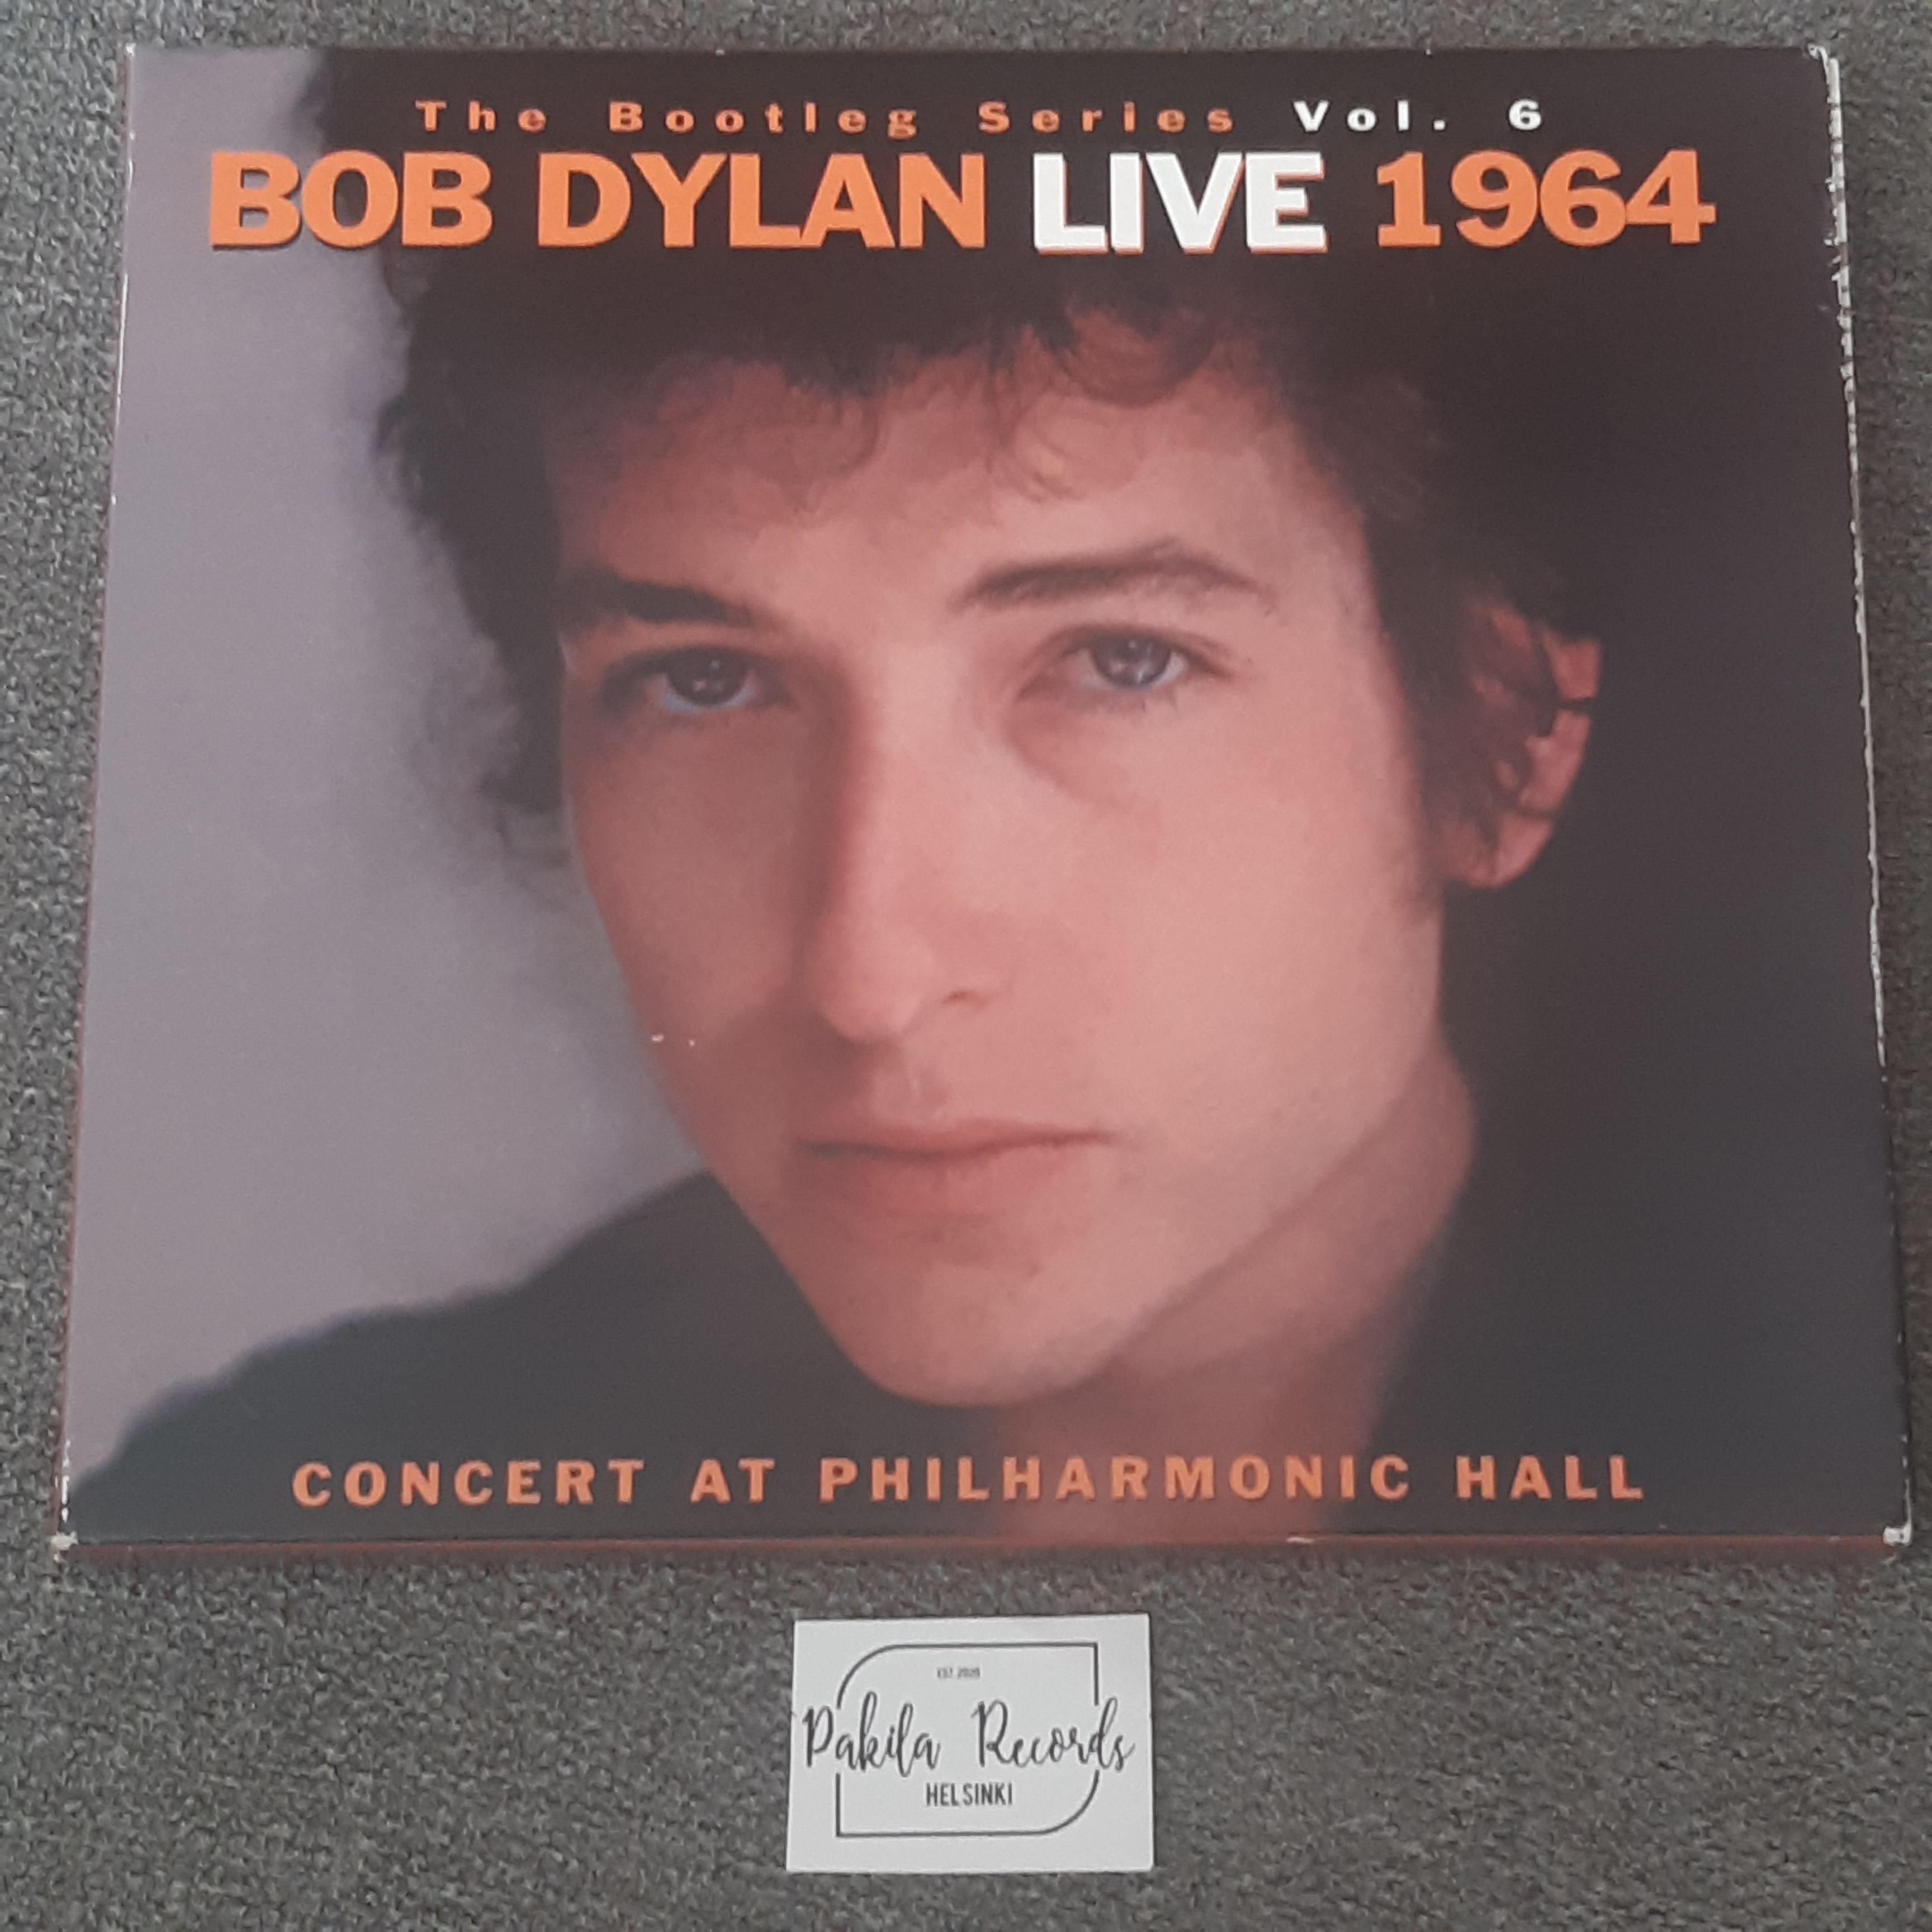 Bob Dylan - Live 1964 (Concert At Philharmonic Hall) - 2 CD (käytetty)